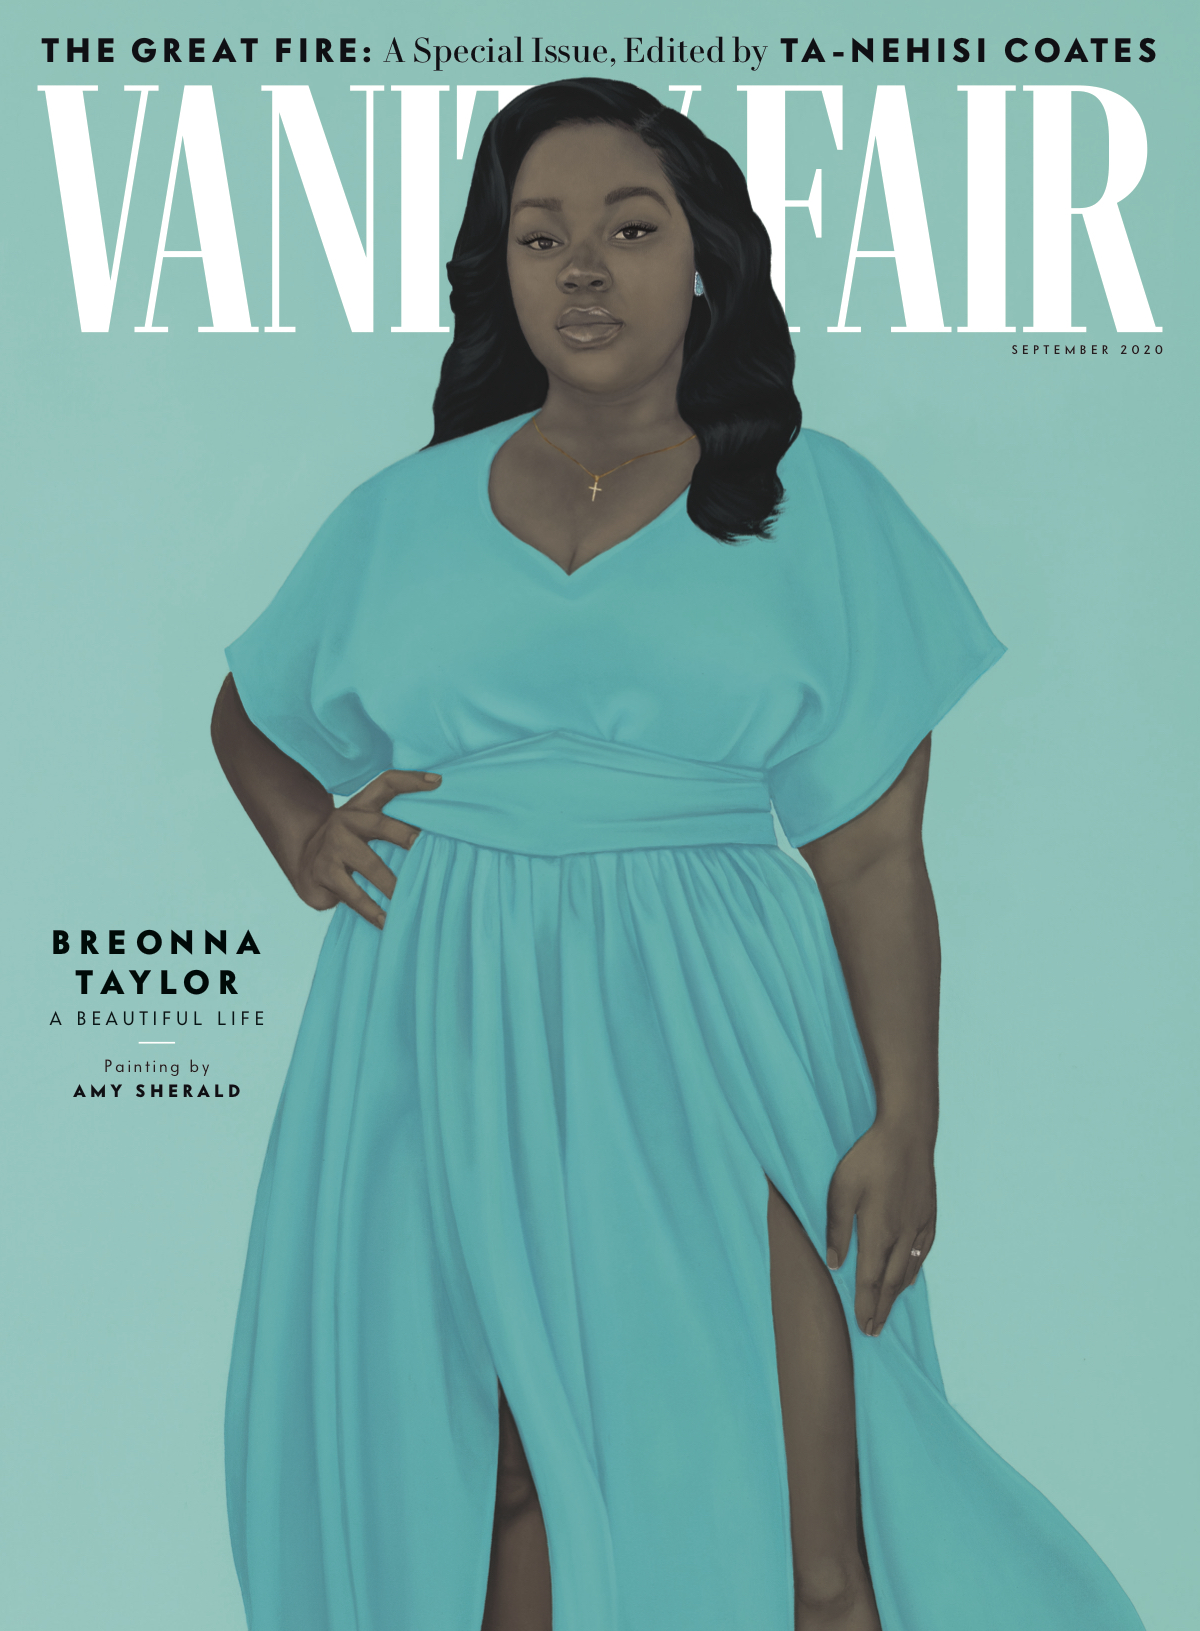 Vanity Fair - Best Illustrated Cover